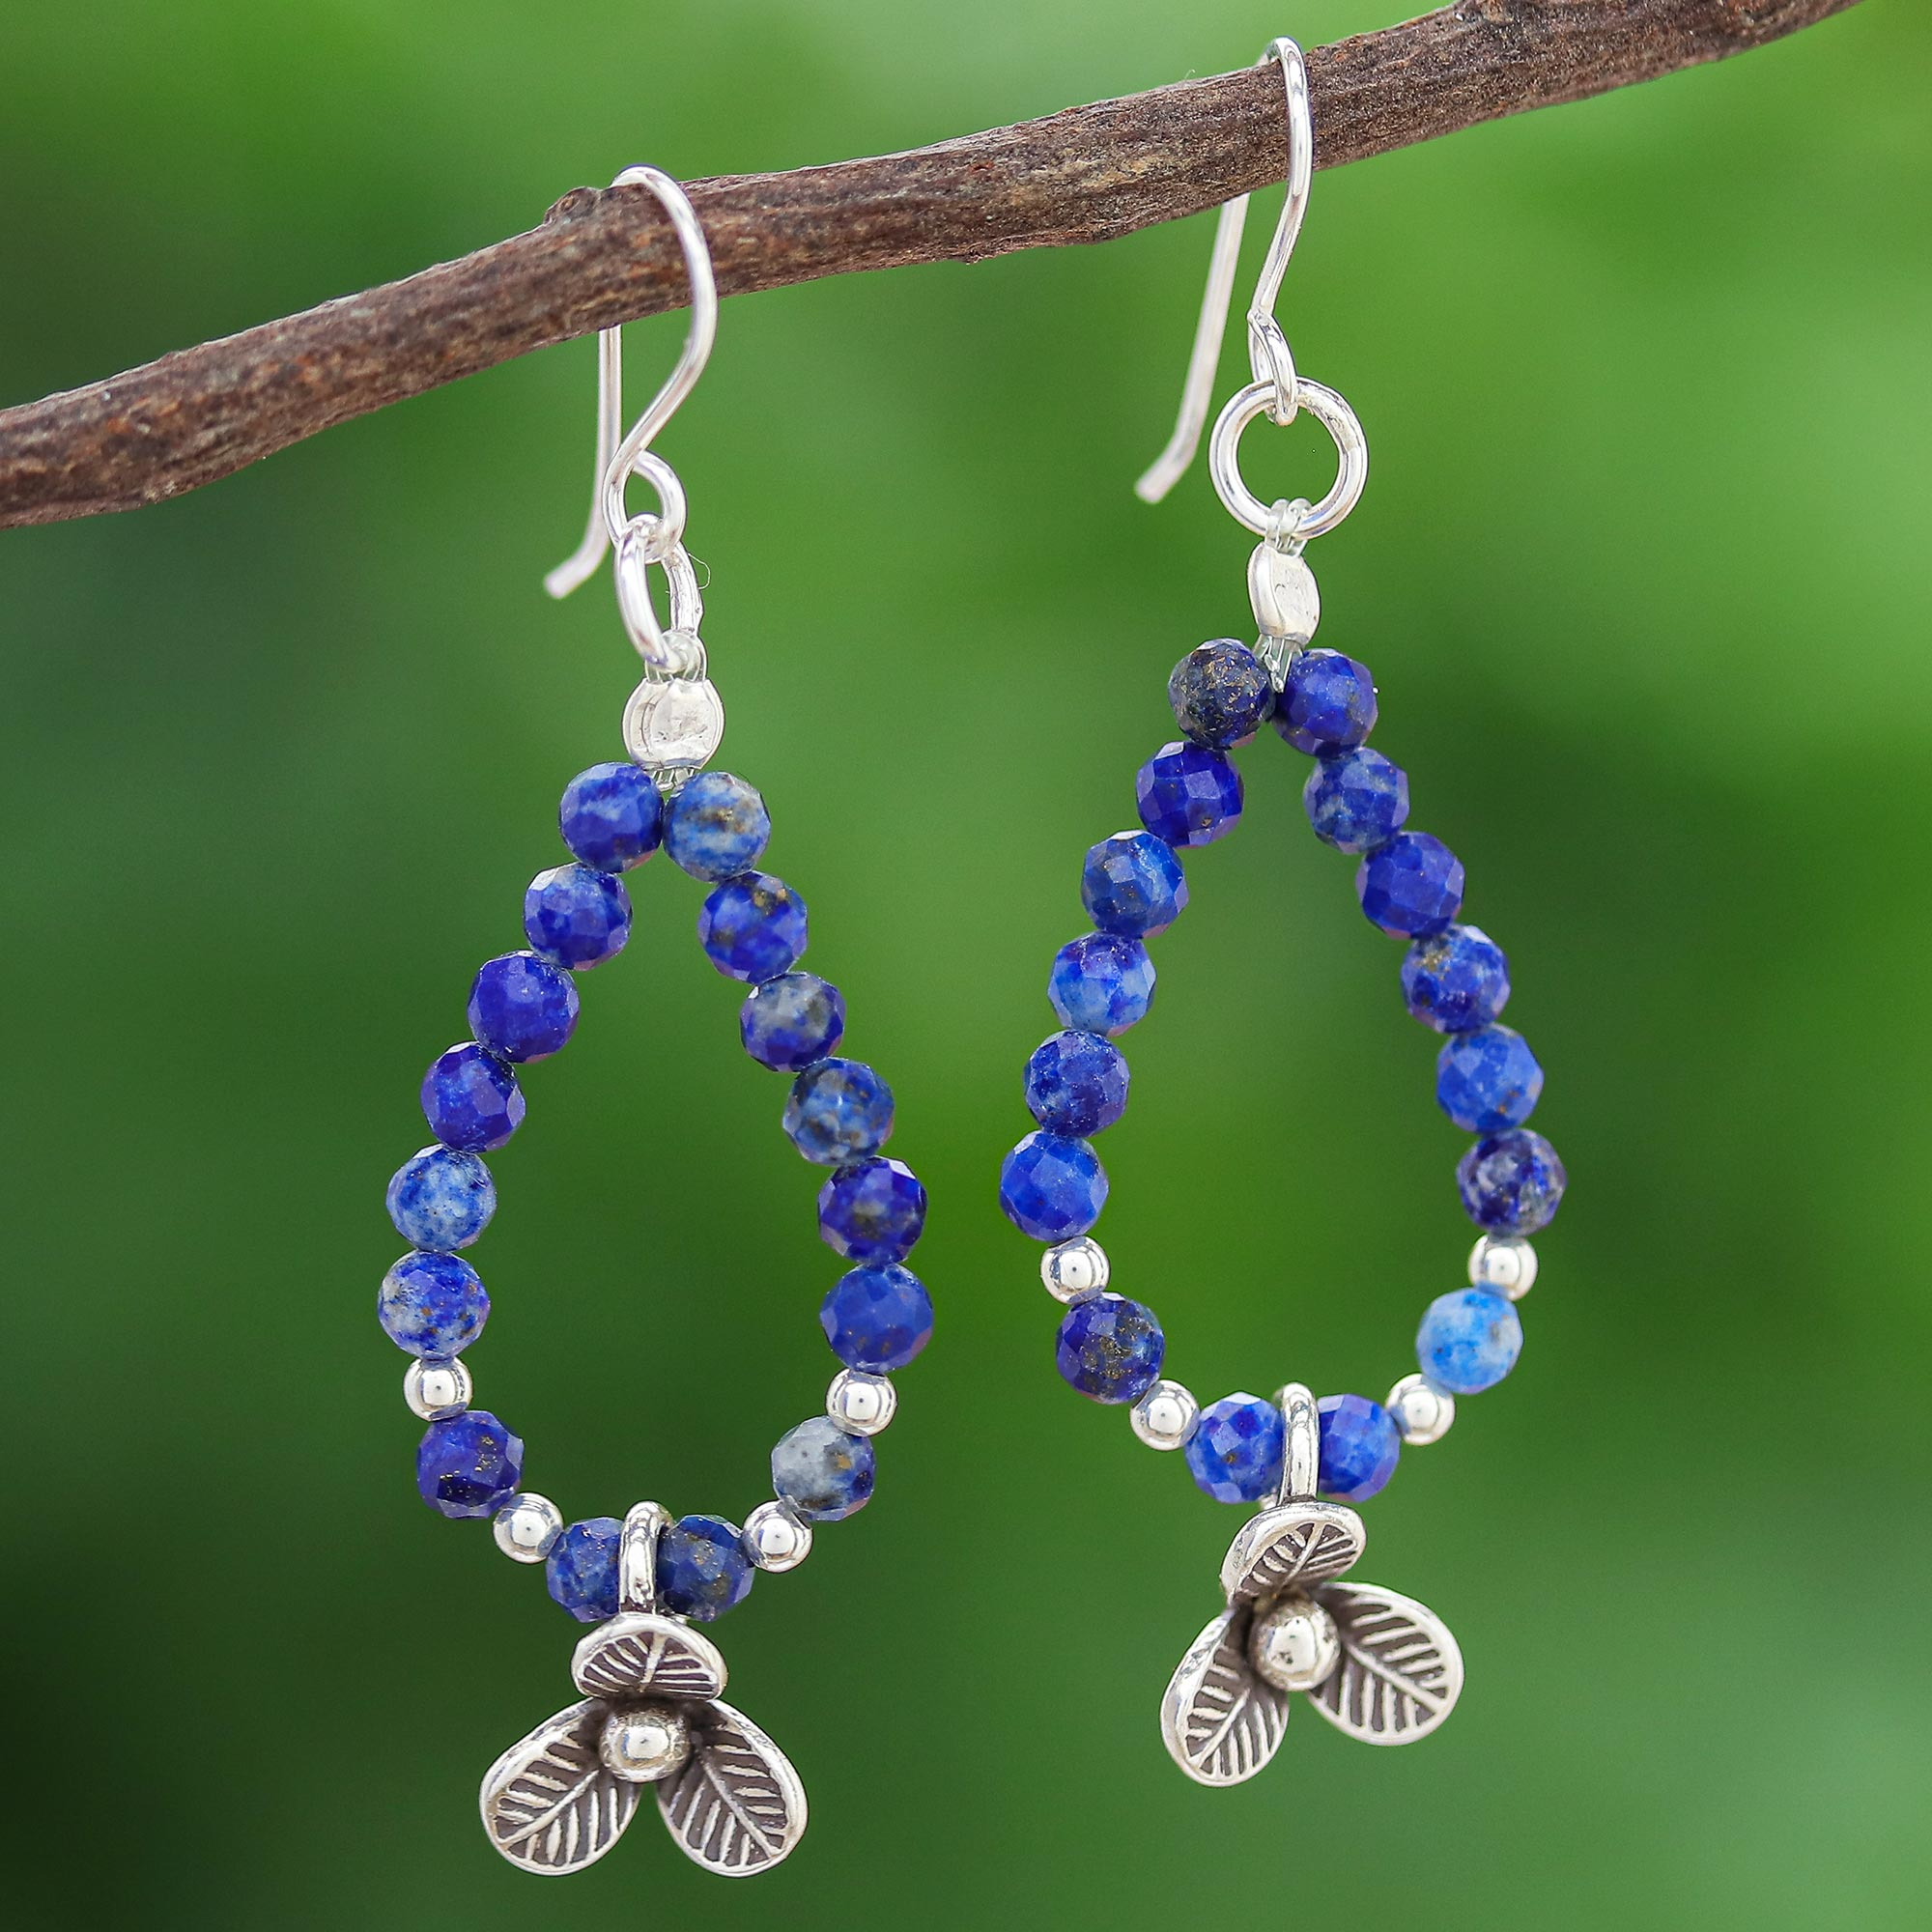 handmade silver dangle earrings with Lapis lazuli bead